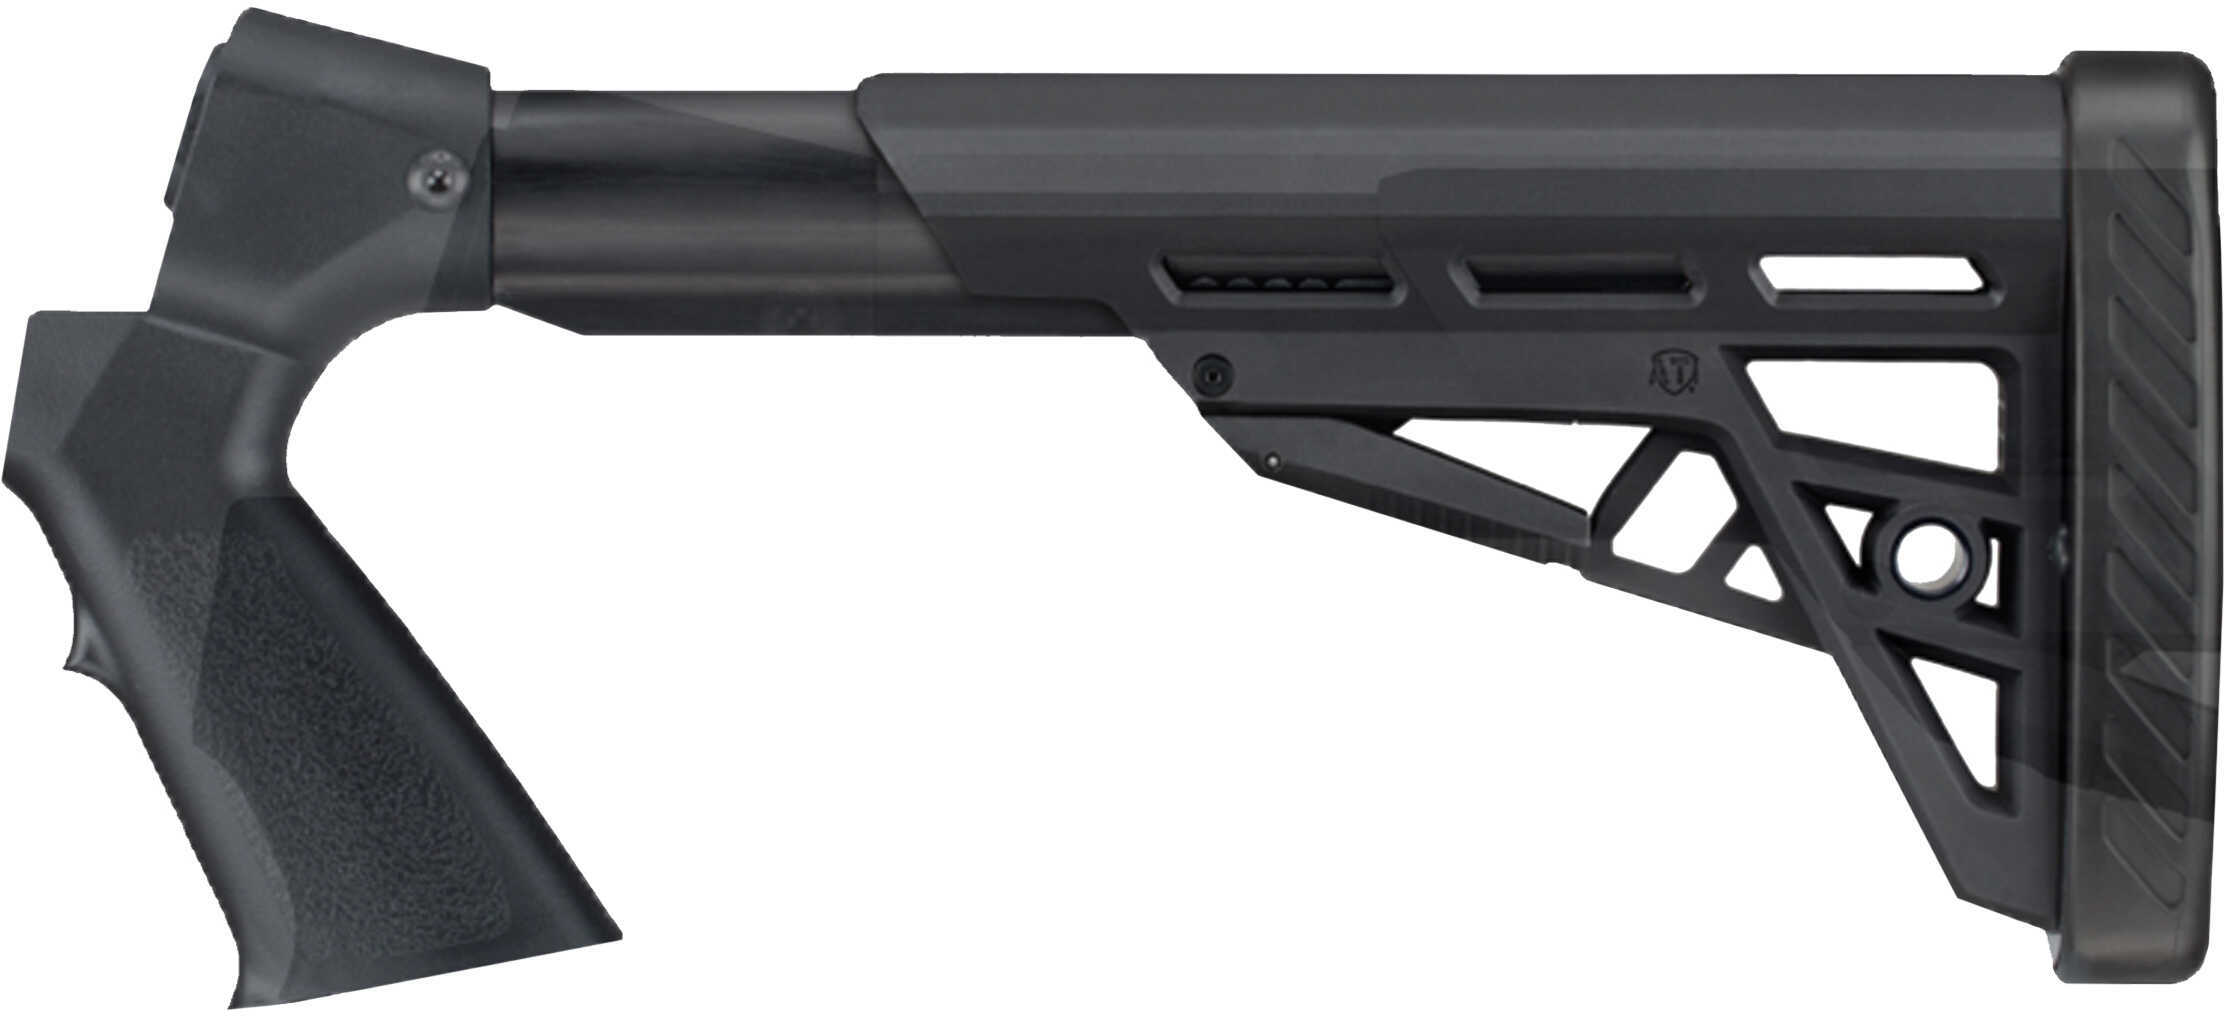 Advanced Technology Intl. TactLite Shotforce 6-Position Stock with Pistol Grip Mossberg/Remington 12 Gauge B1102000